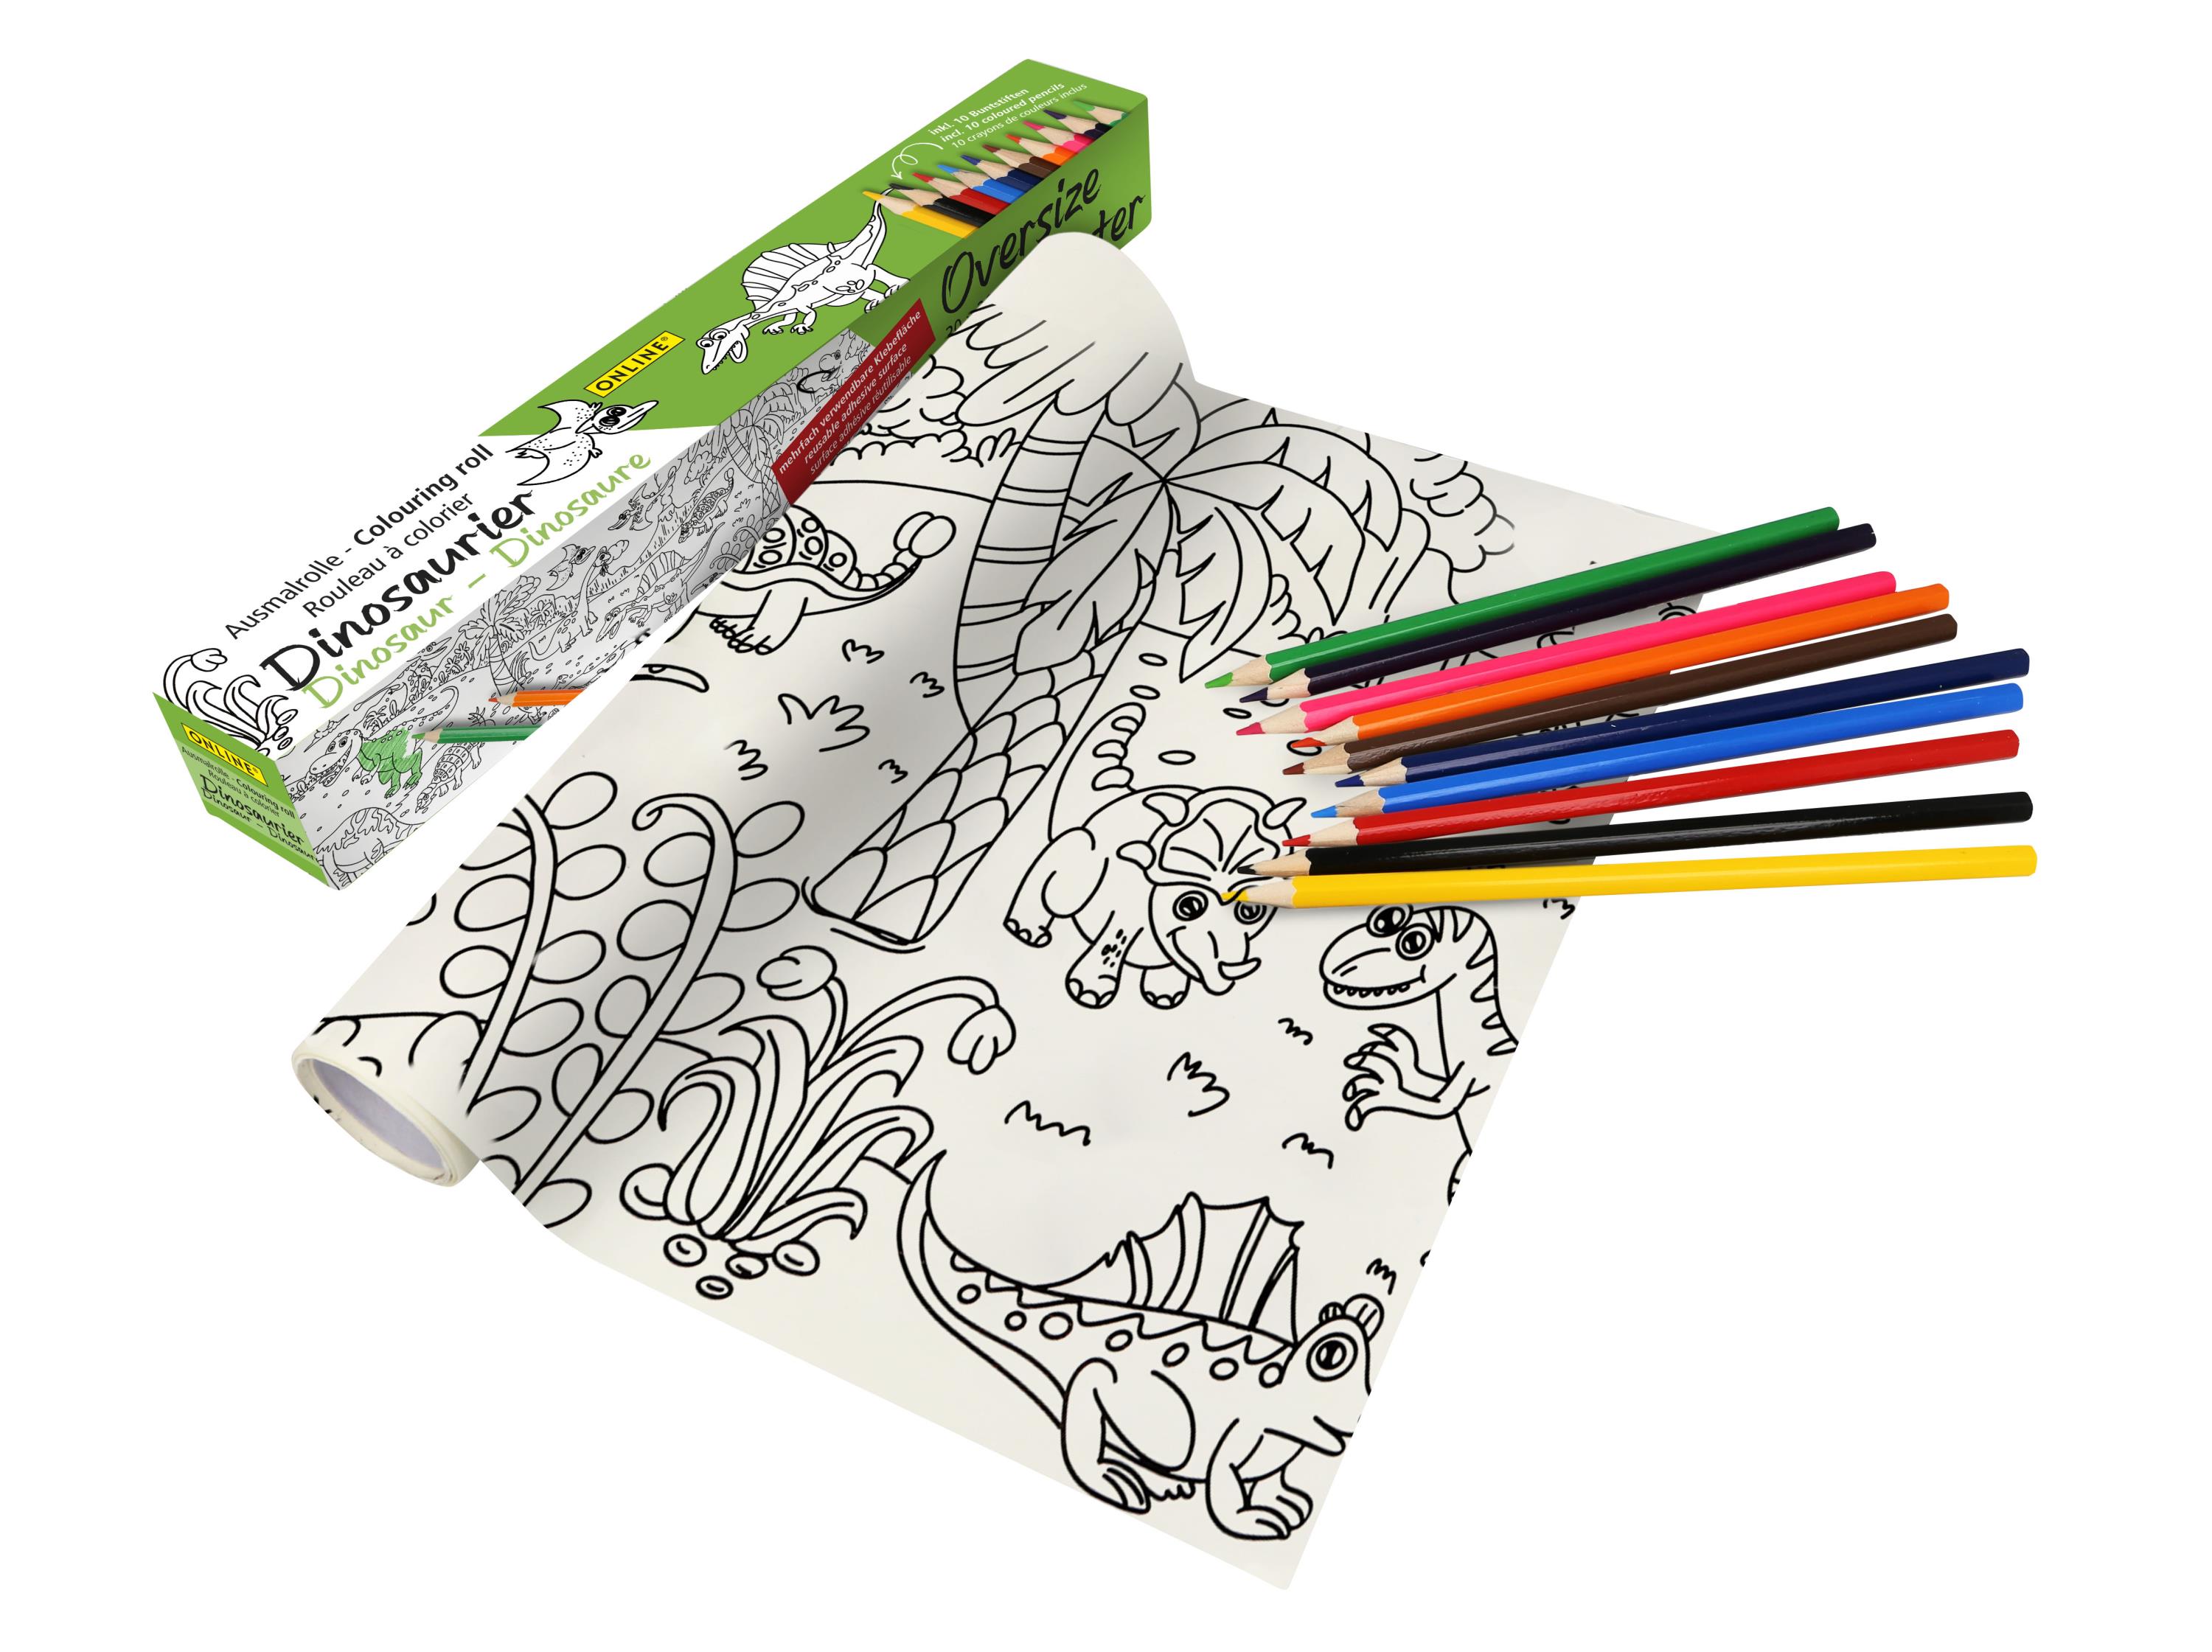 Colouring Roll, 30 x 200 cm self-adhesive, incl. 10 coloured pencils, Dinosaur